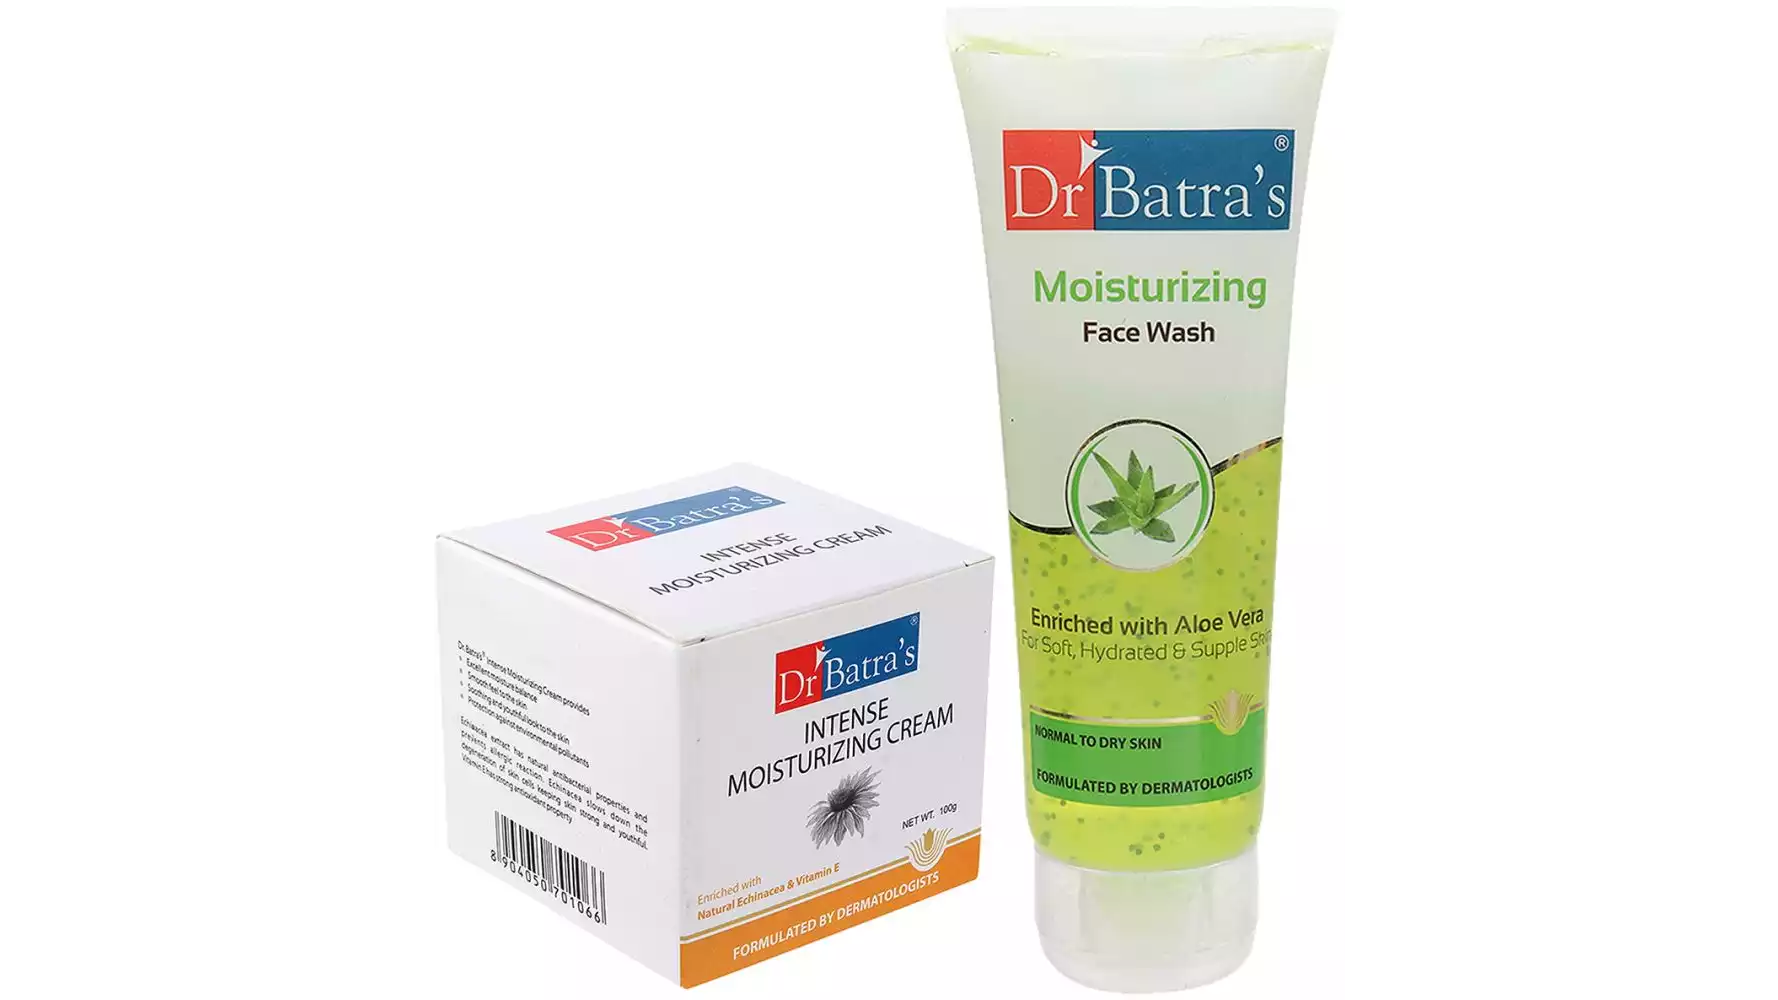 Dr Batras Intense Moisturizing Cream & Facewash Moisturizing Combo (1Pack)